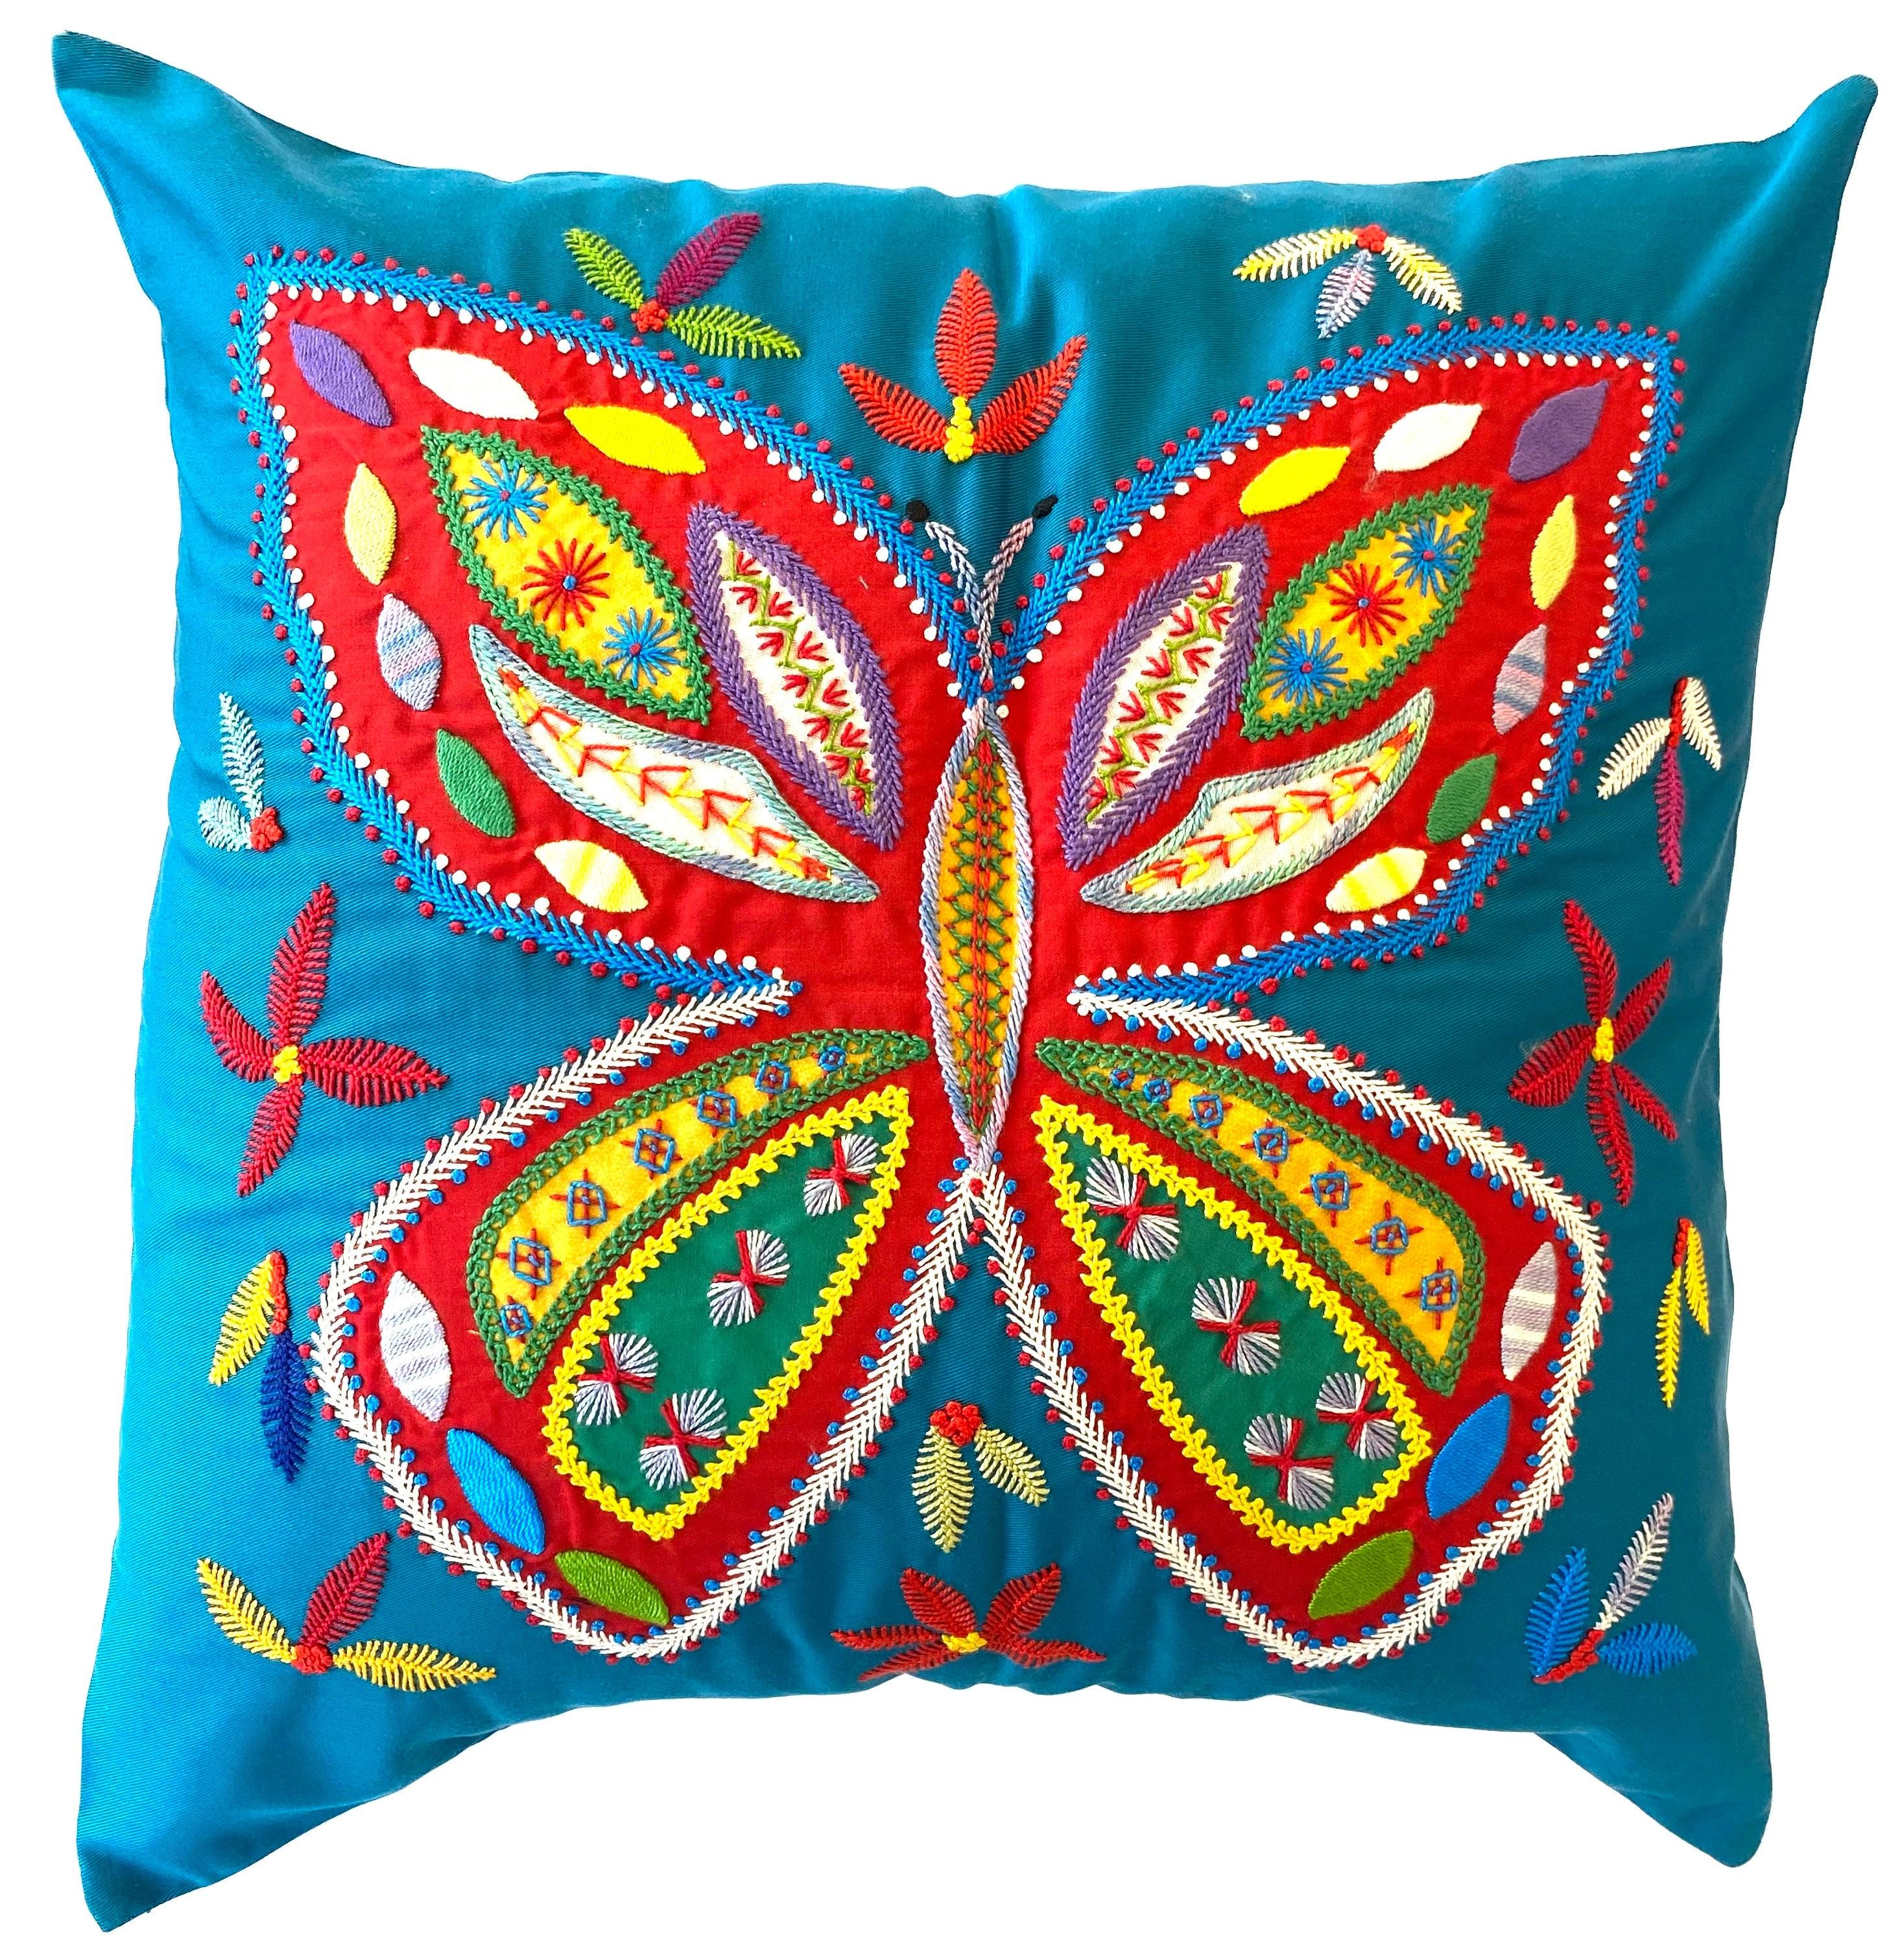 Butterfly Pillow on Turquoise Honduras Threads